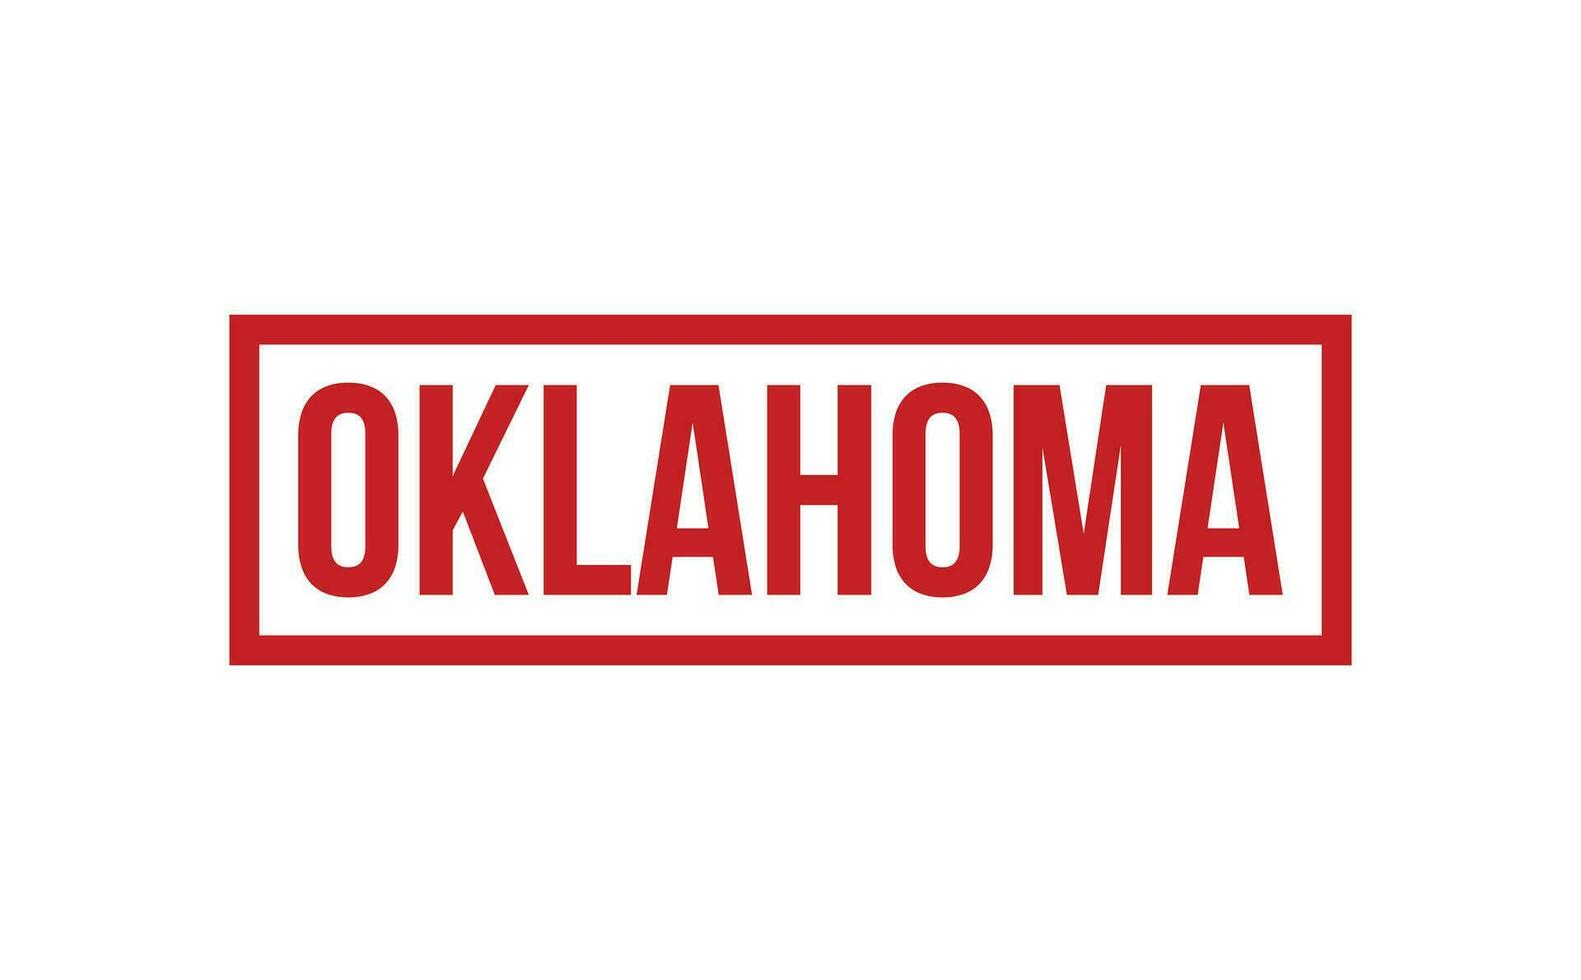 Oklahoma caucho sello sello vector